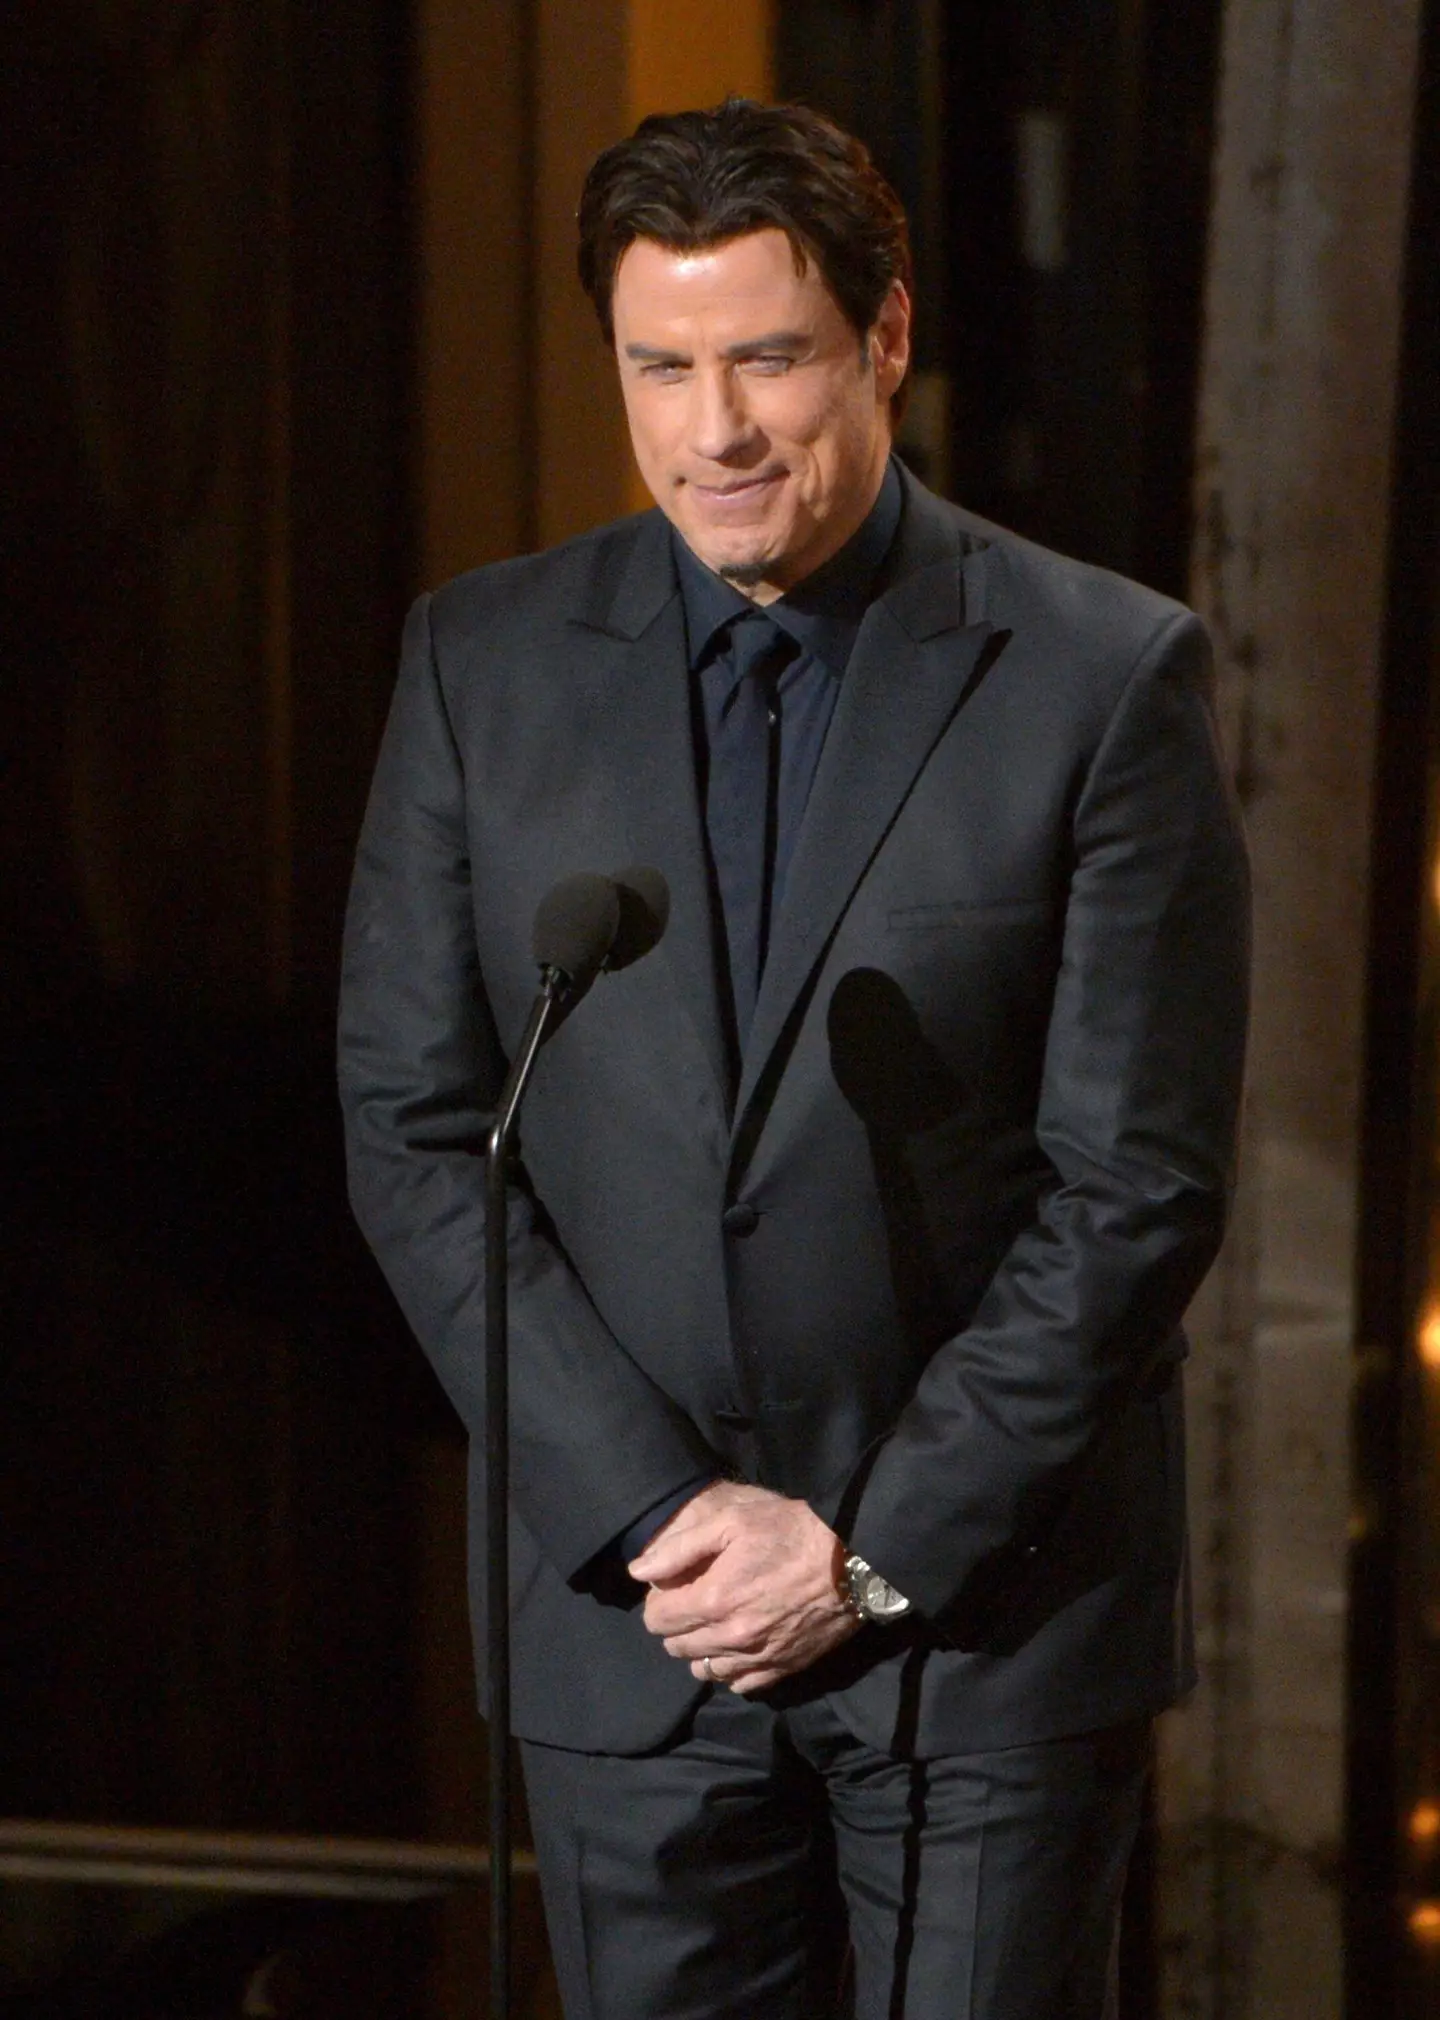 Travolta accidentally called Idina 'Adele Dazeem' at the 2014 Oscars.